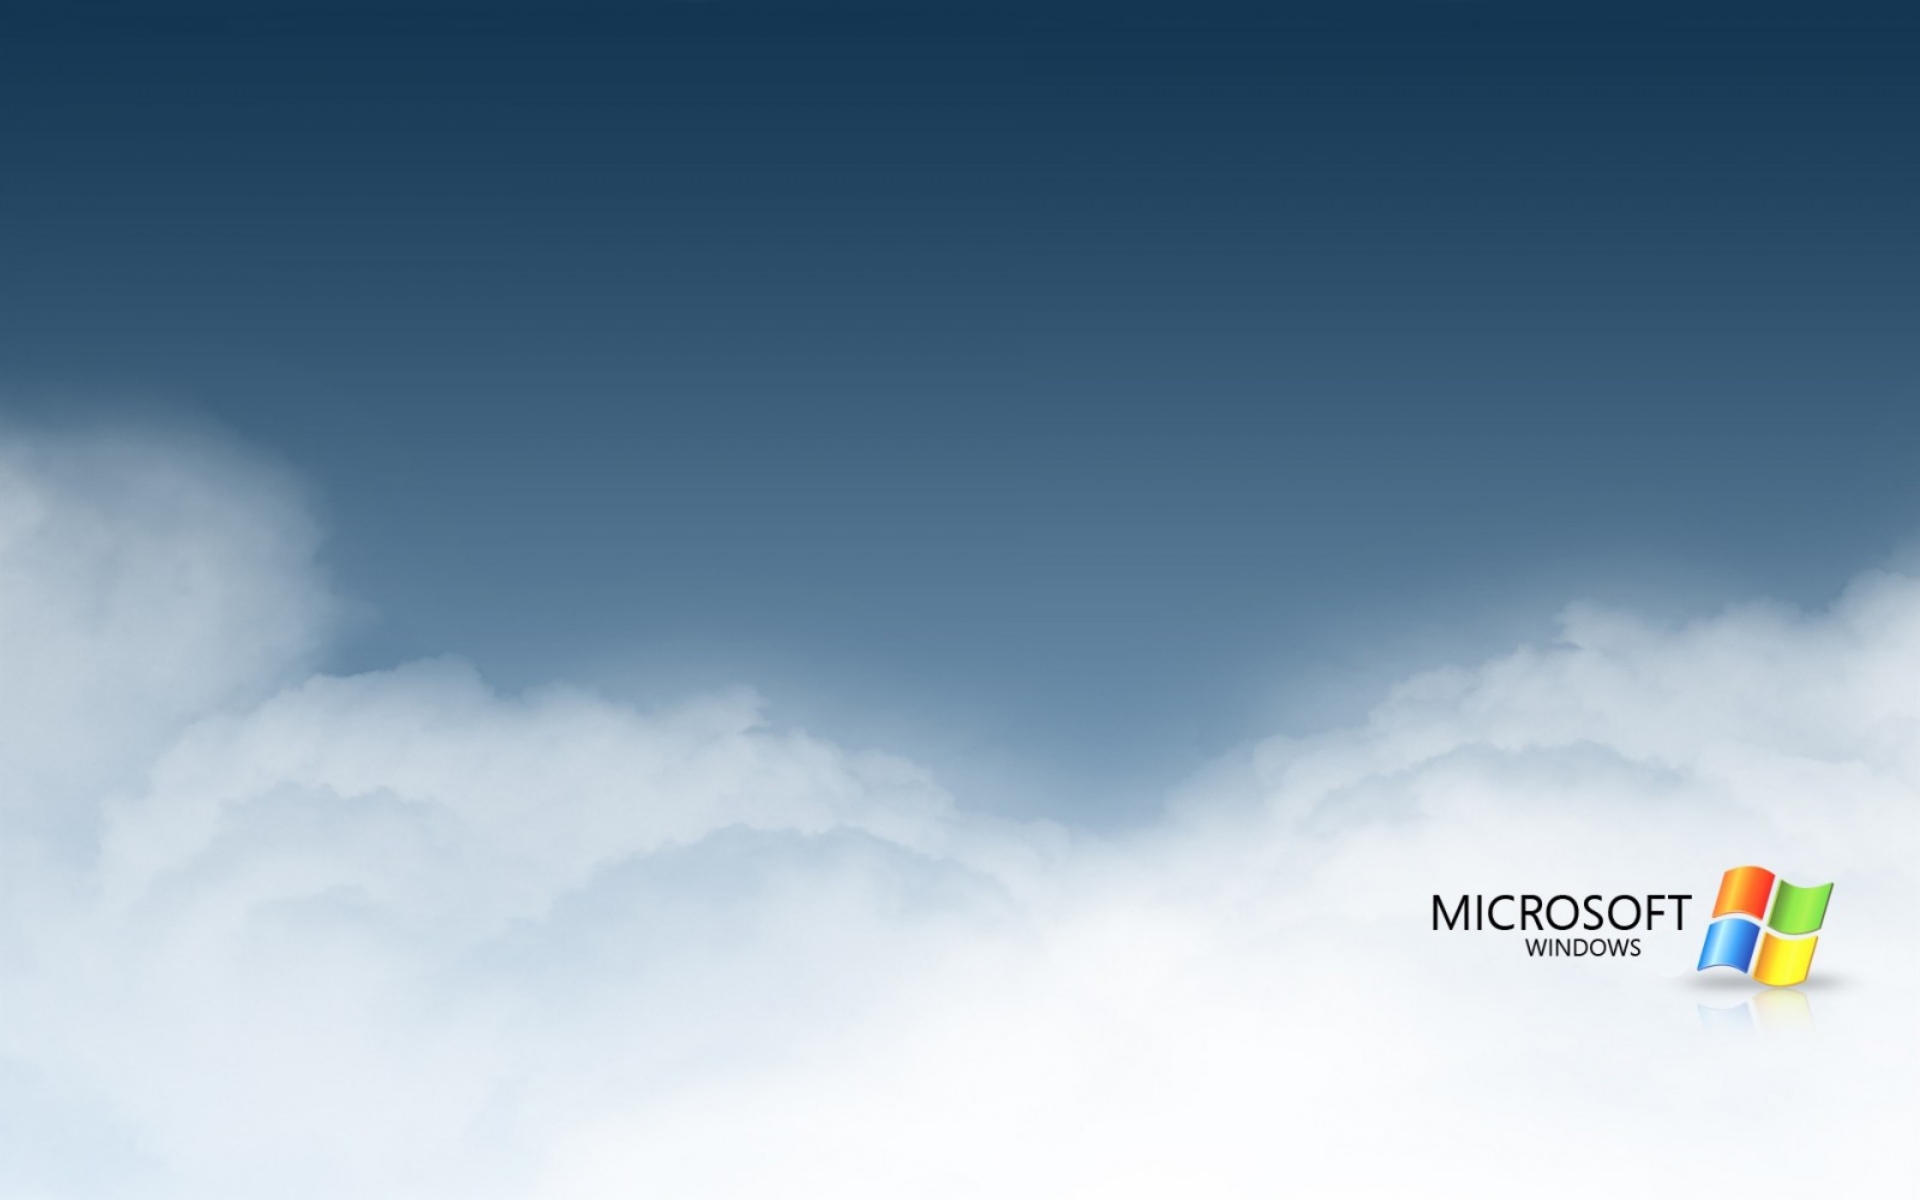 windows_clouds_blue_white_logo-1920x1200.jpg